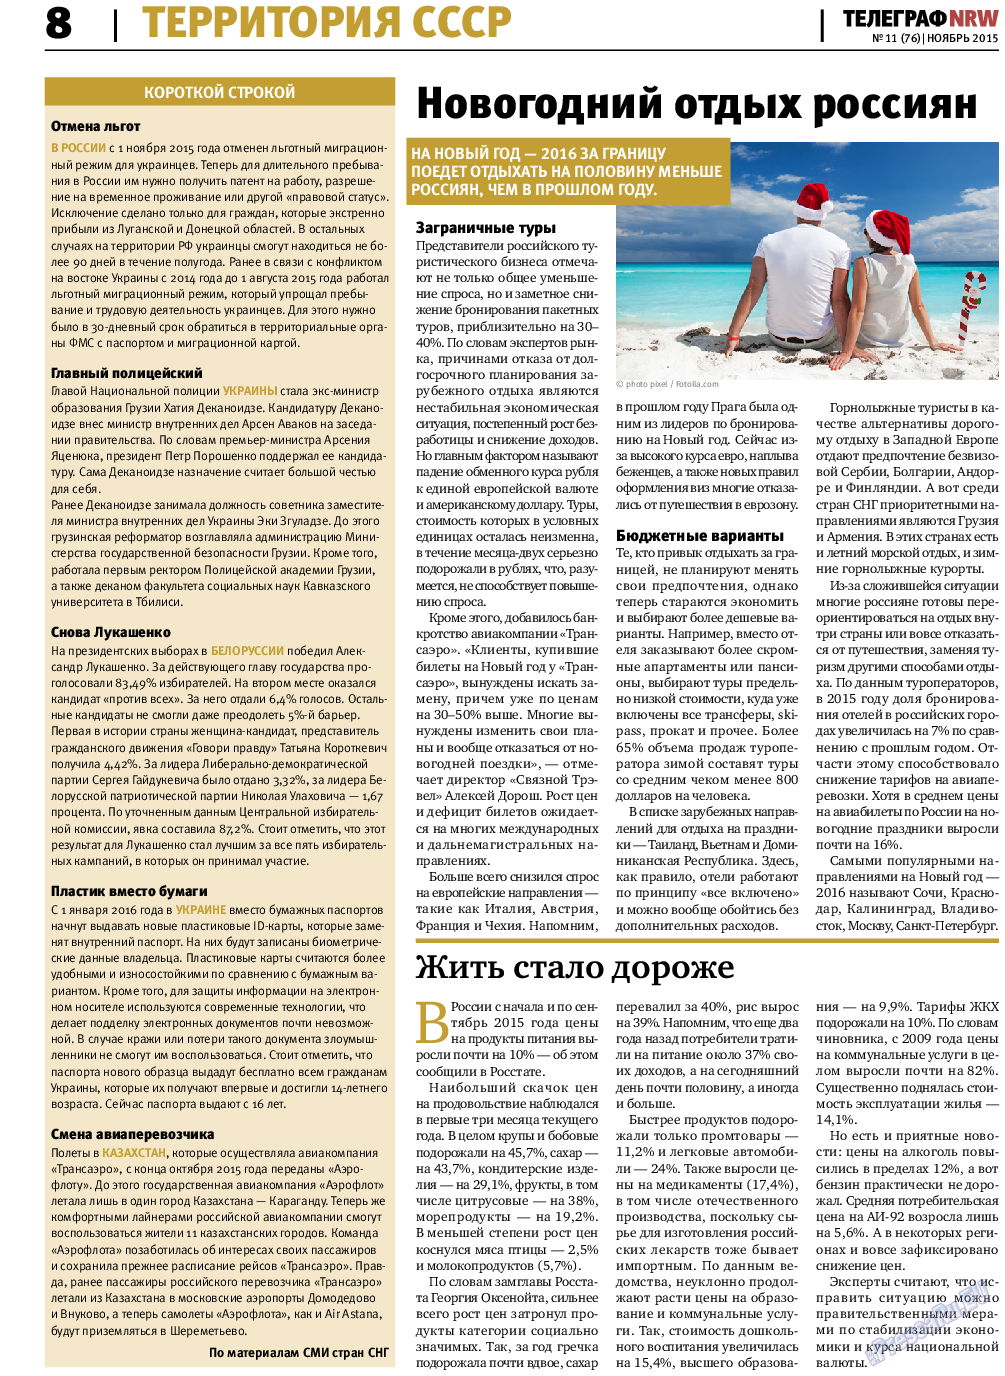 Телеграф NRW, газета. 2015 №11 стр.8